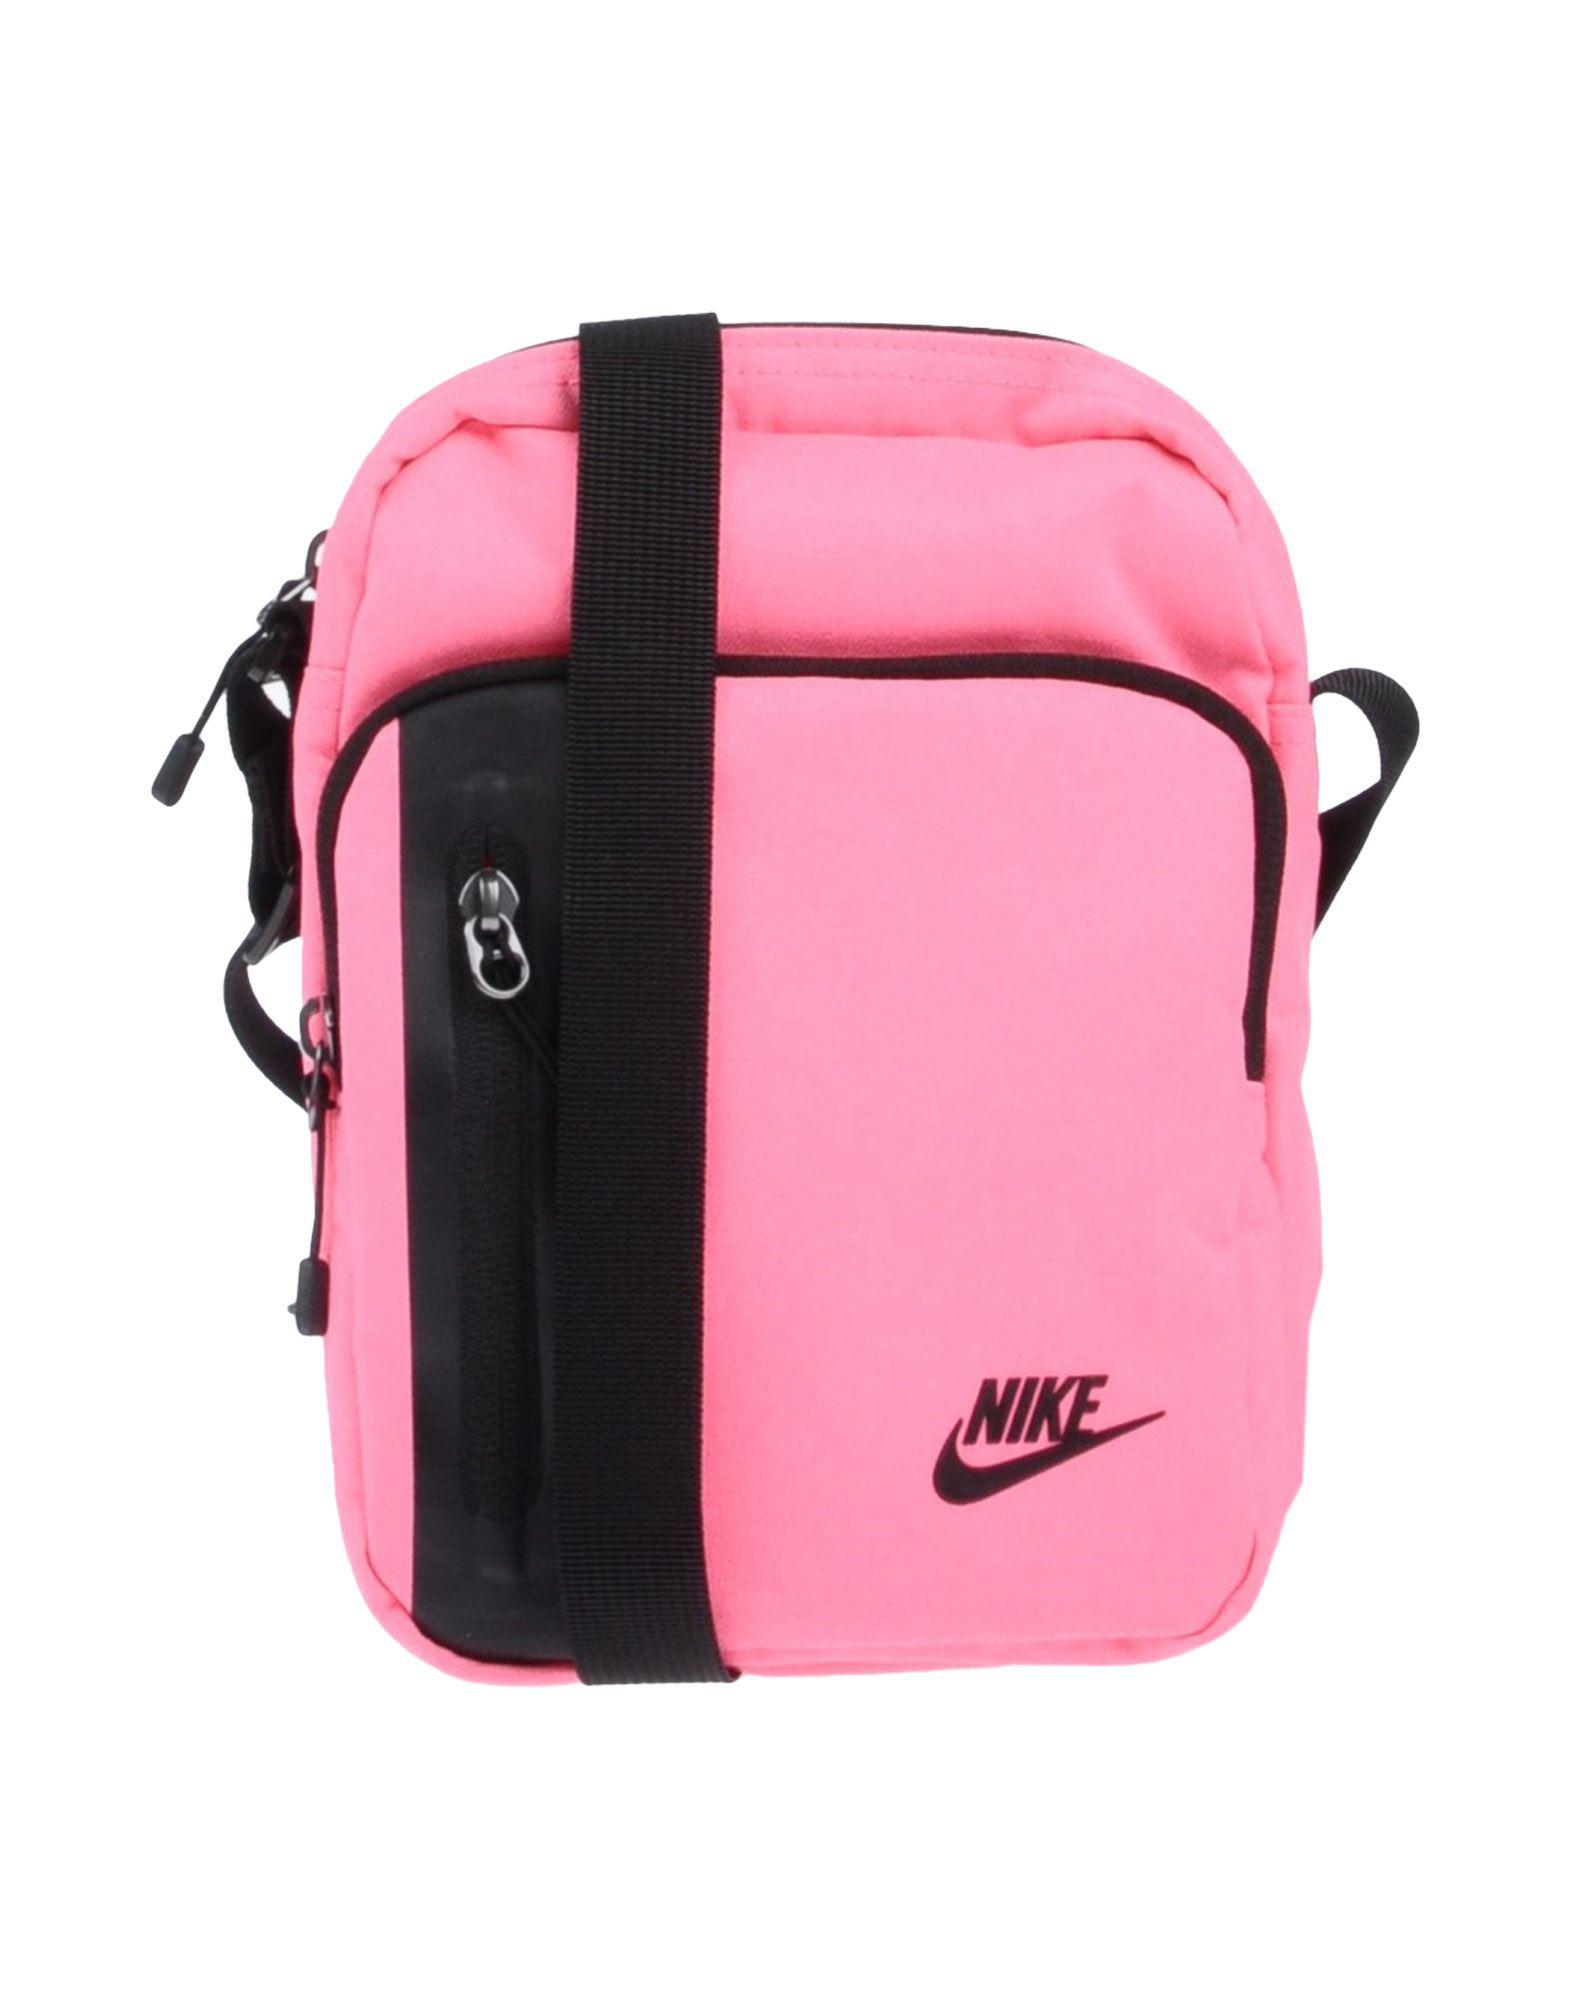 Nike Synthetic Cross-body Bag in Pink - Lyst